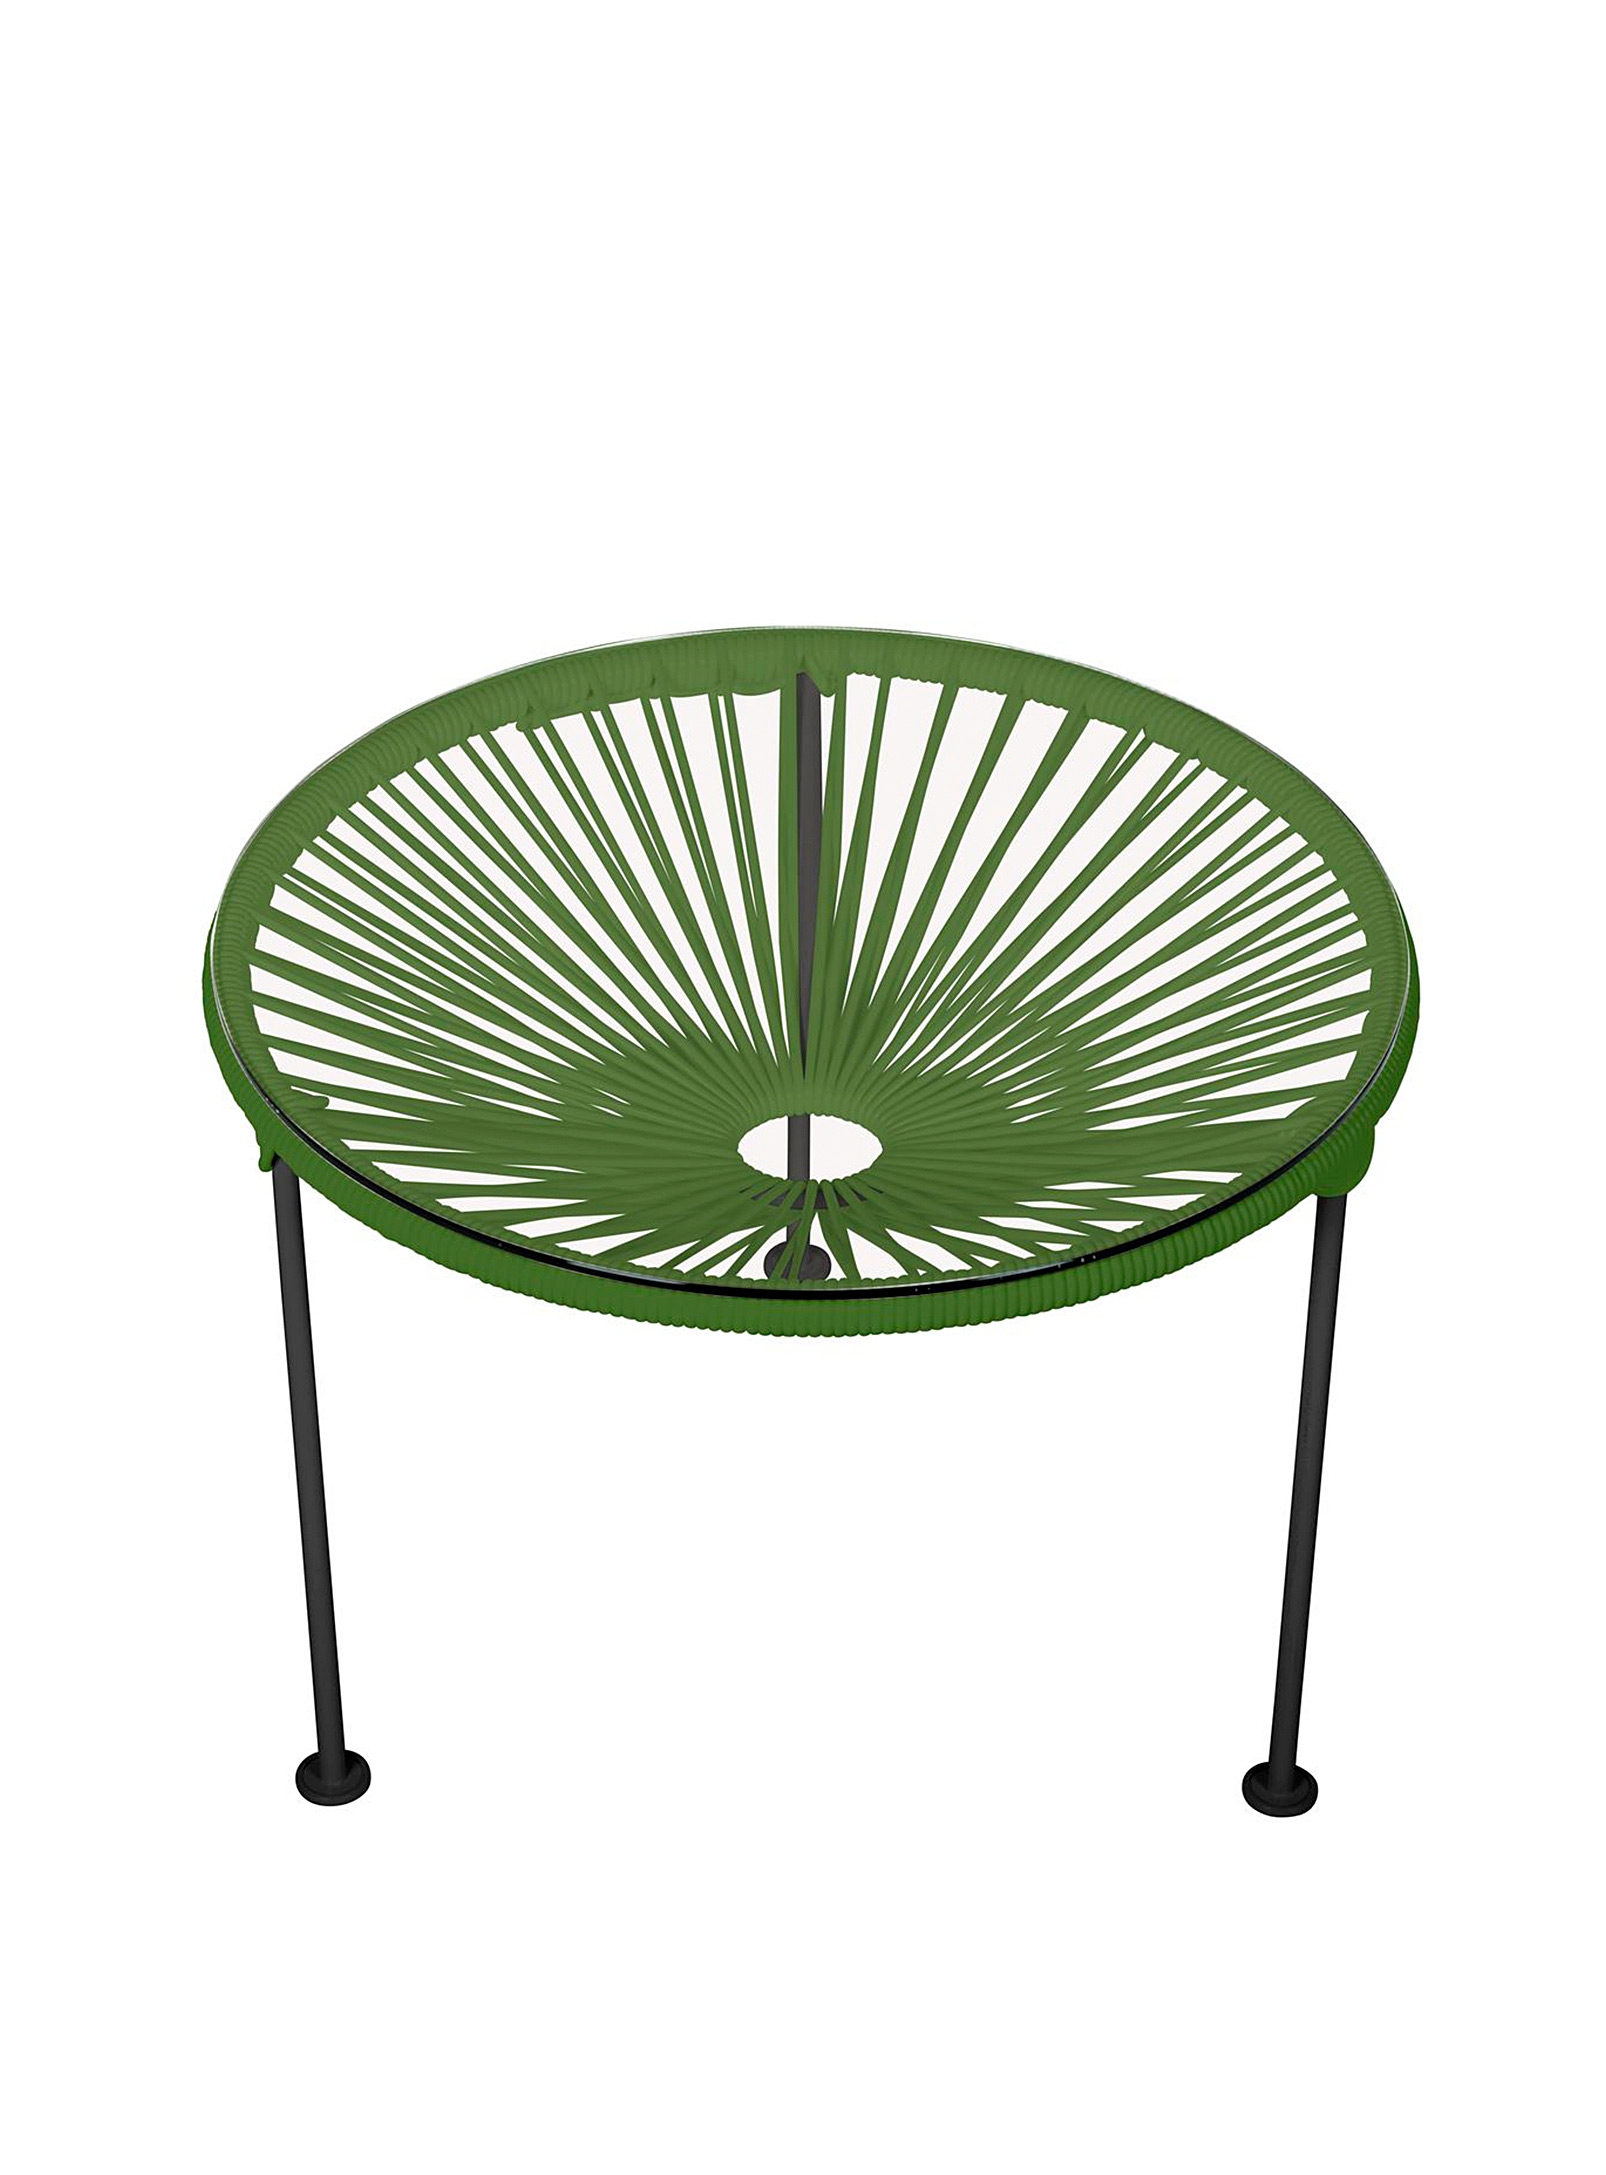 Simons Maison Zicatela Outdoor Table In Green